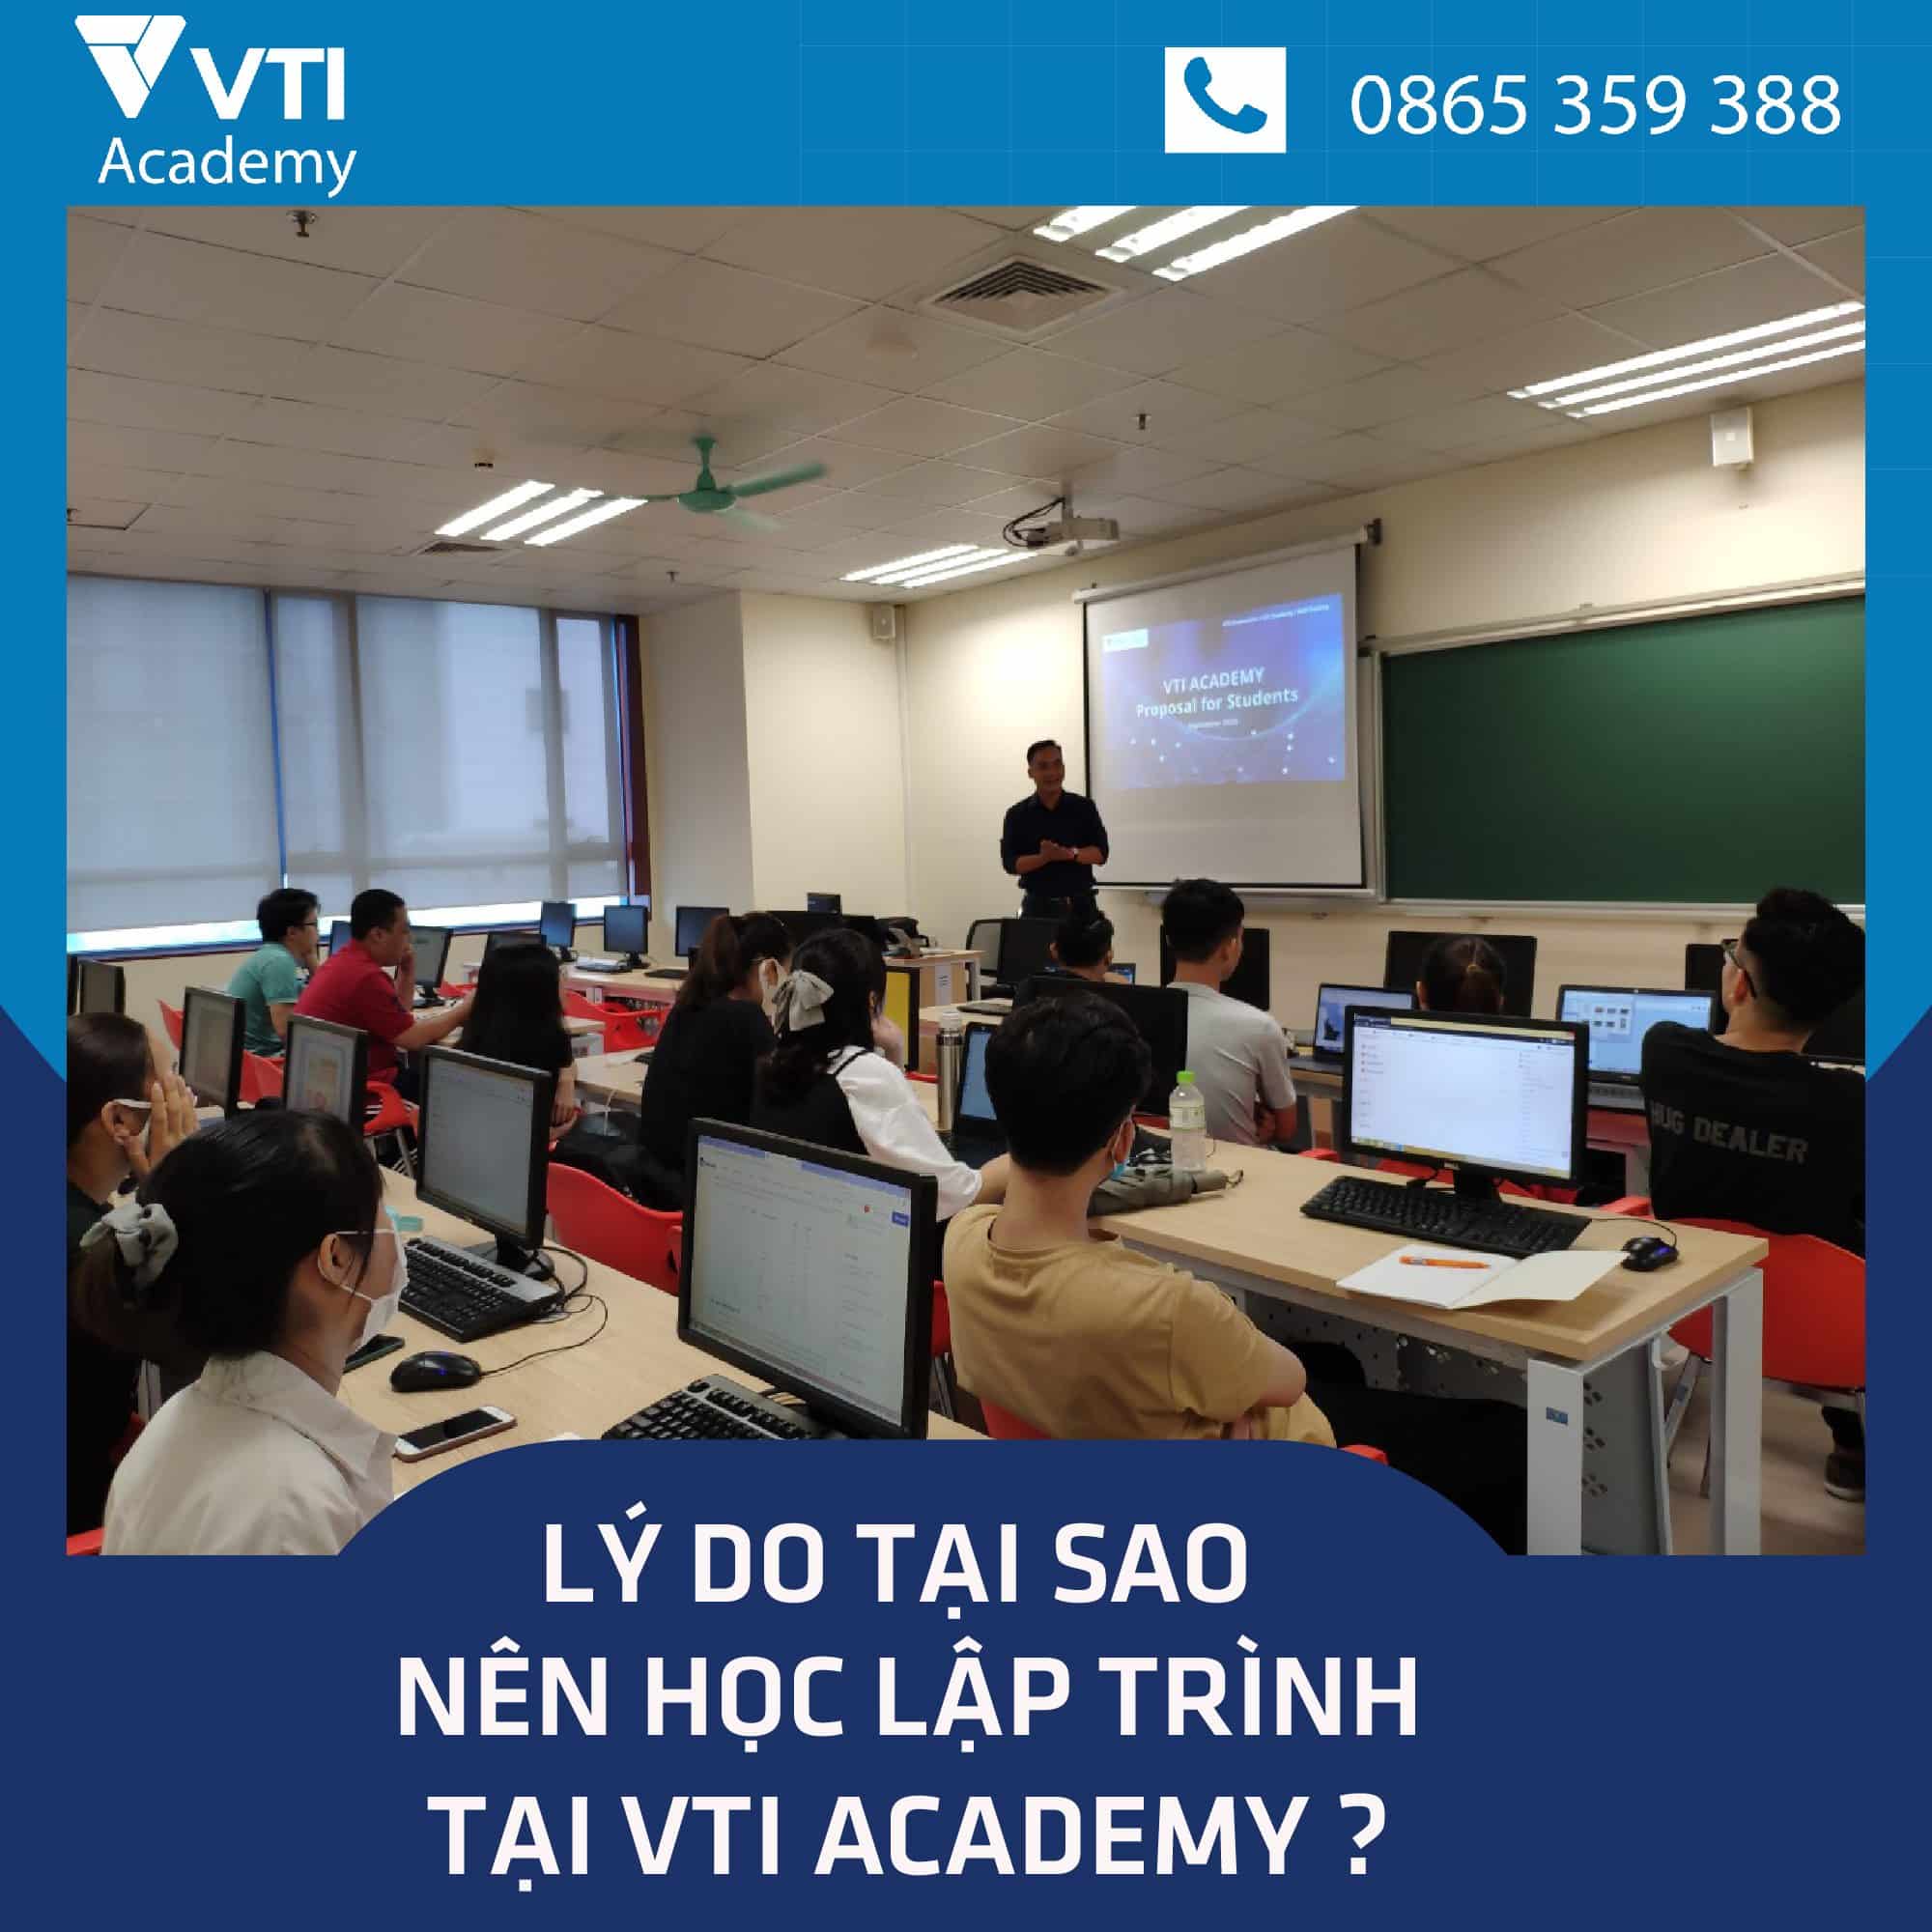 Trung Tâm VTI Academy